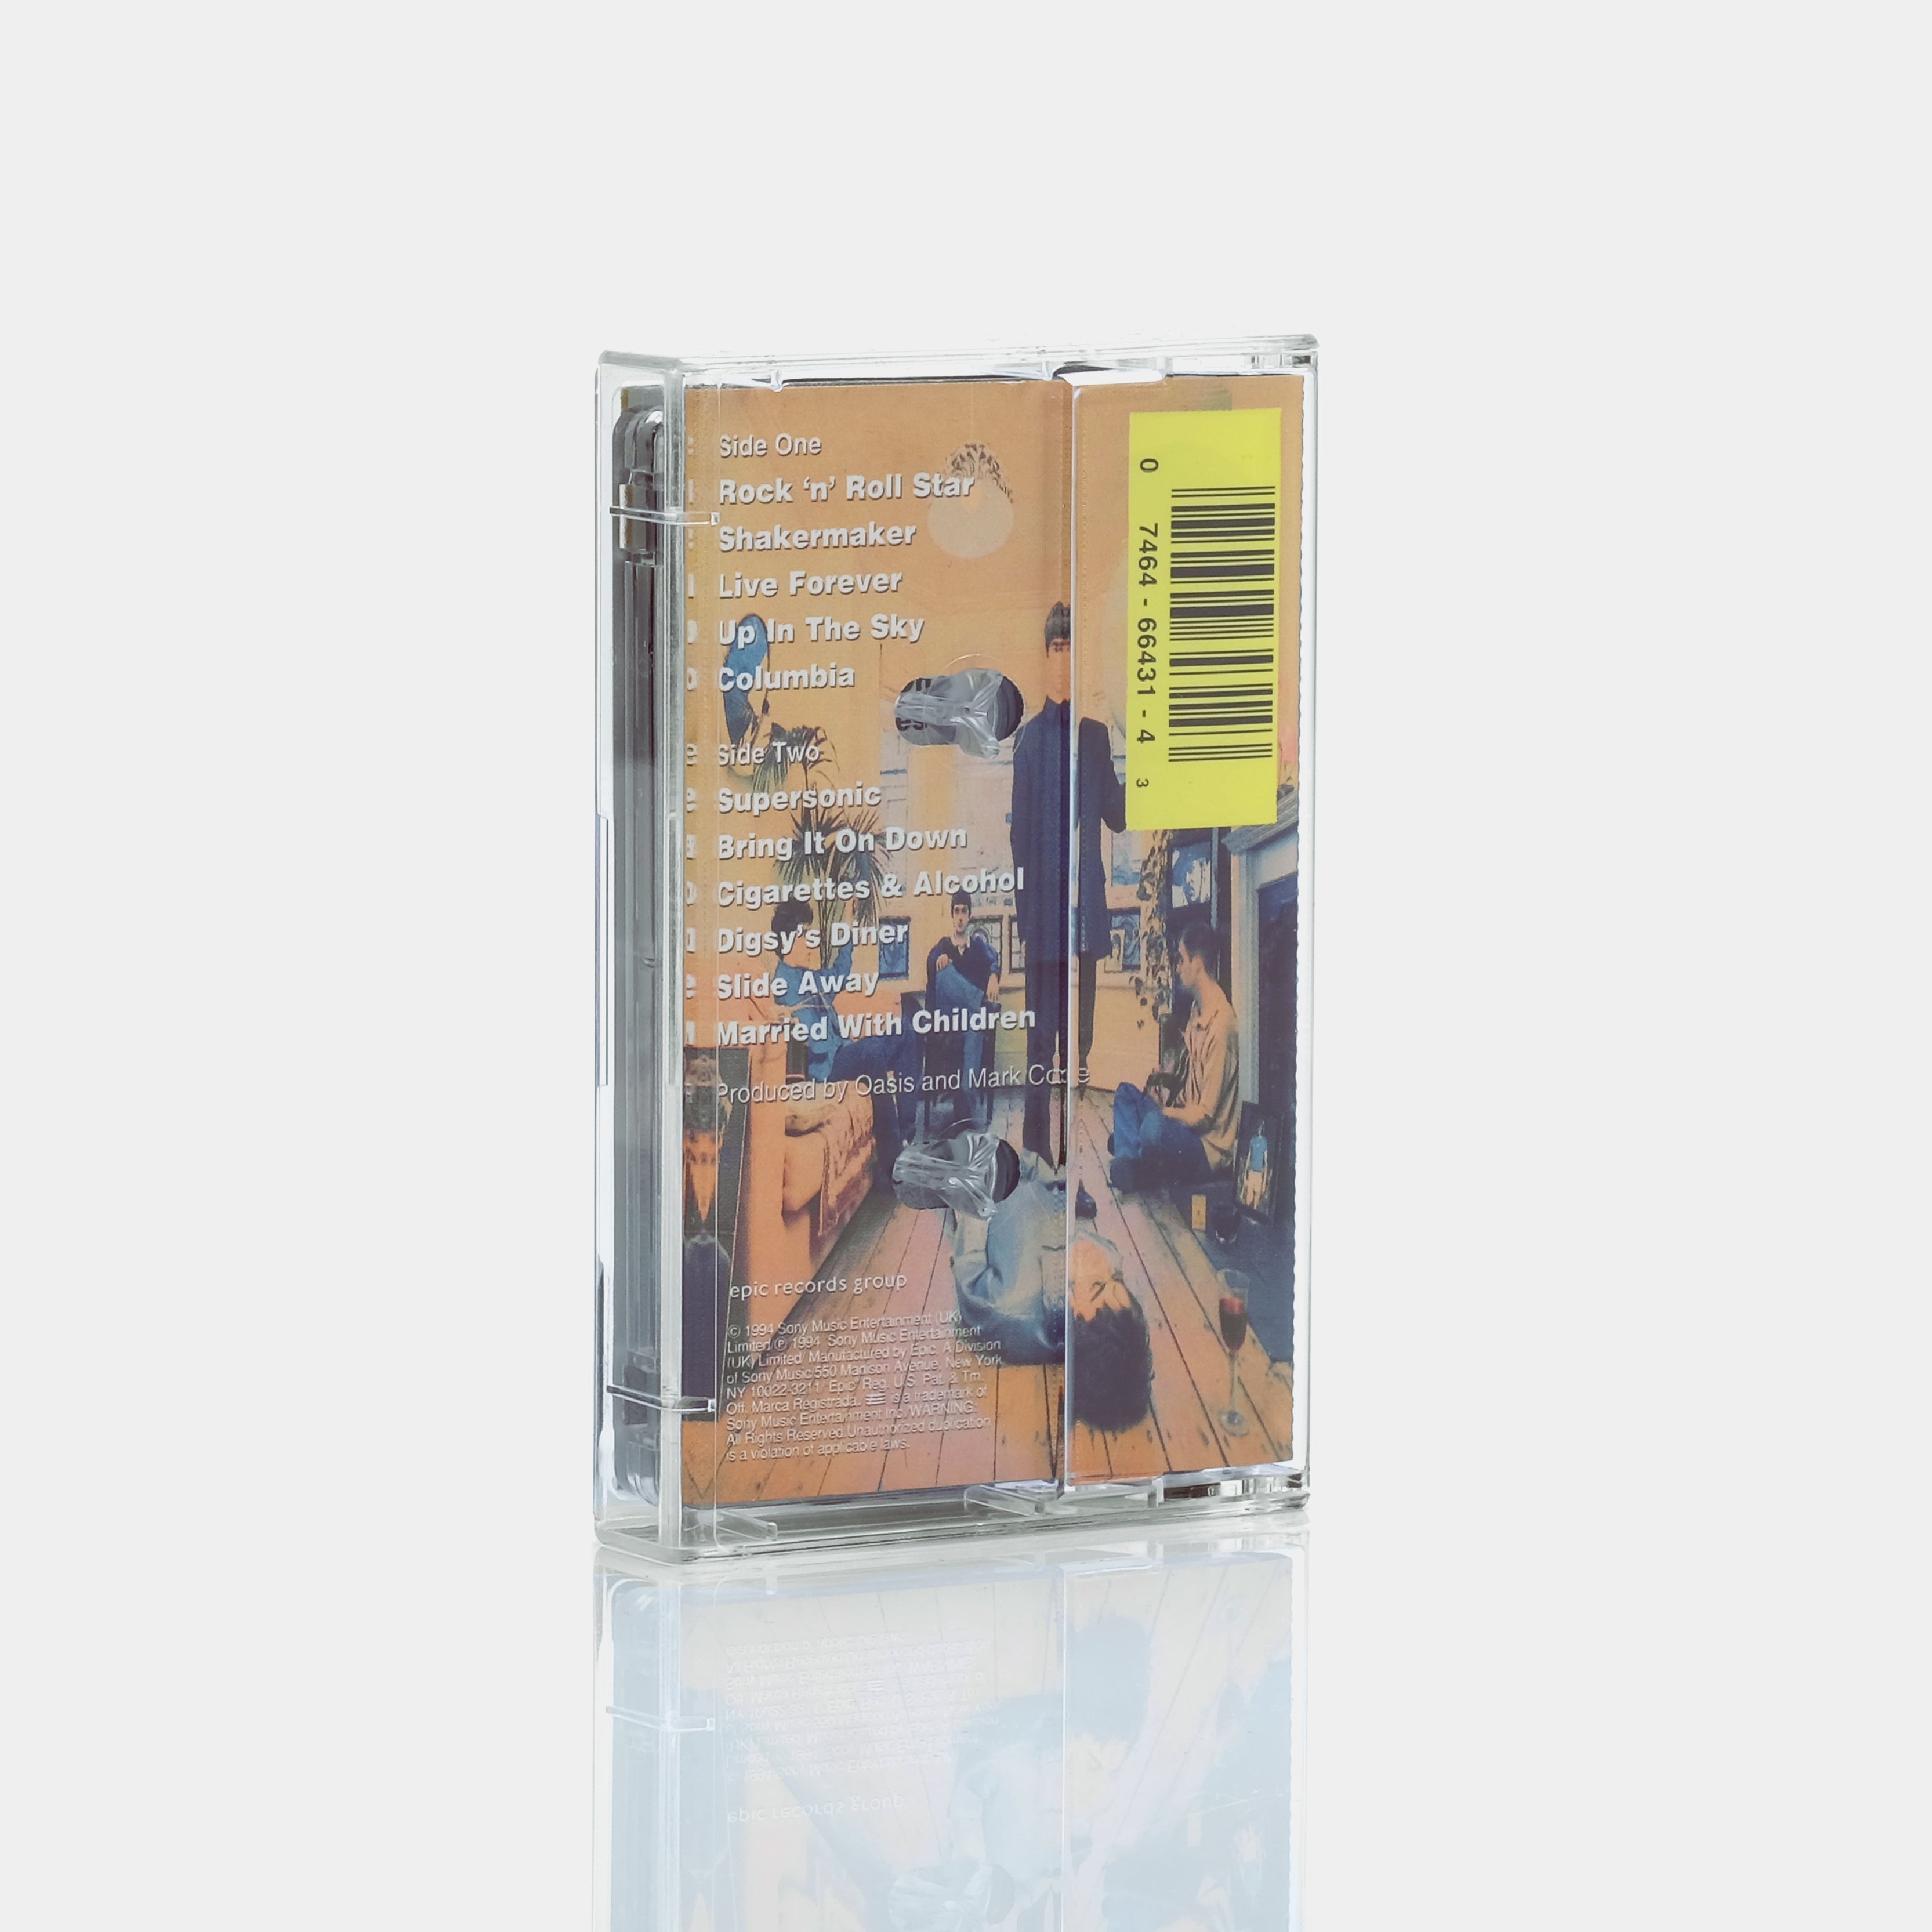 Oasis - Definitely Maybe Cassette Tape